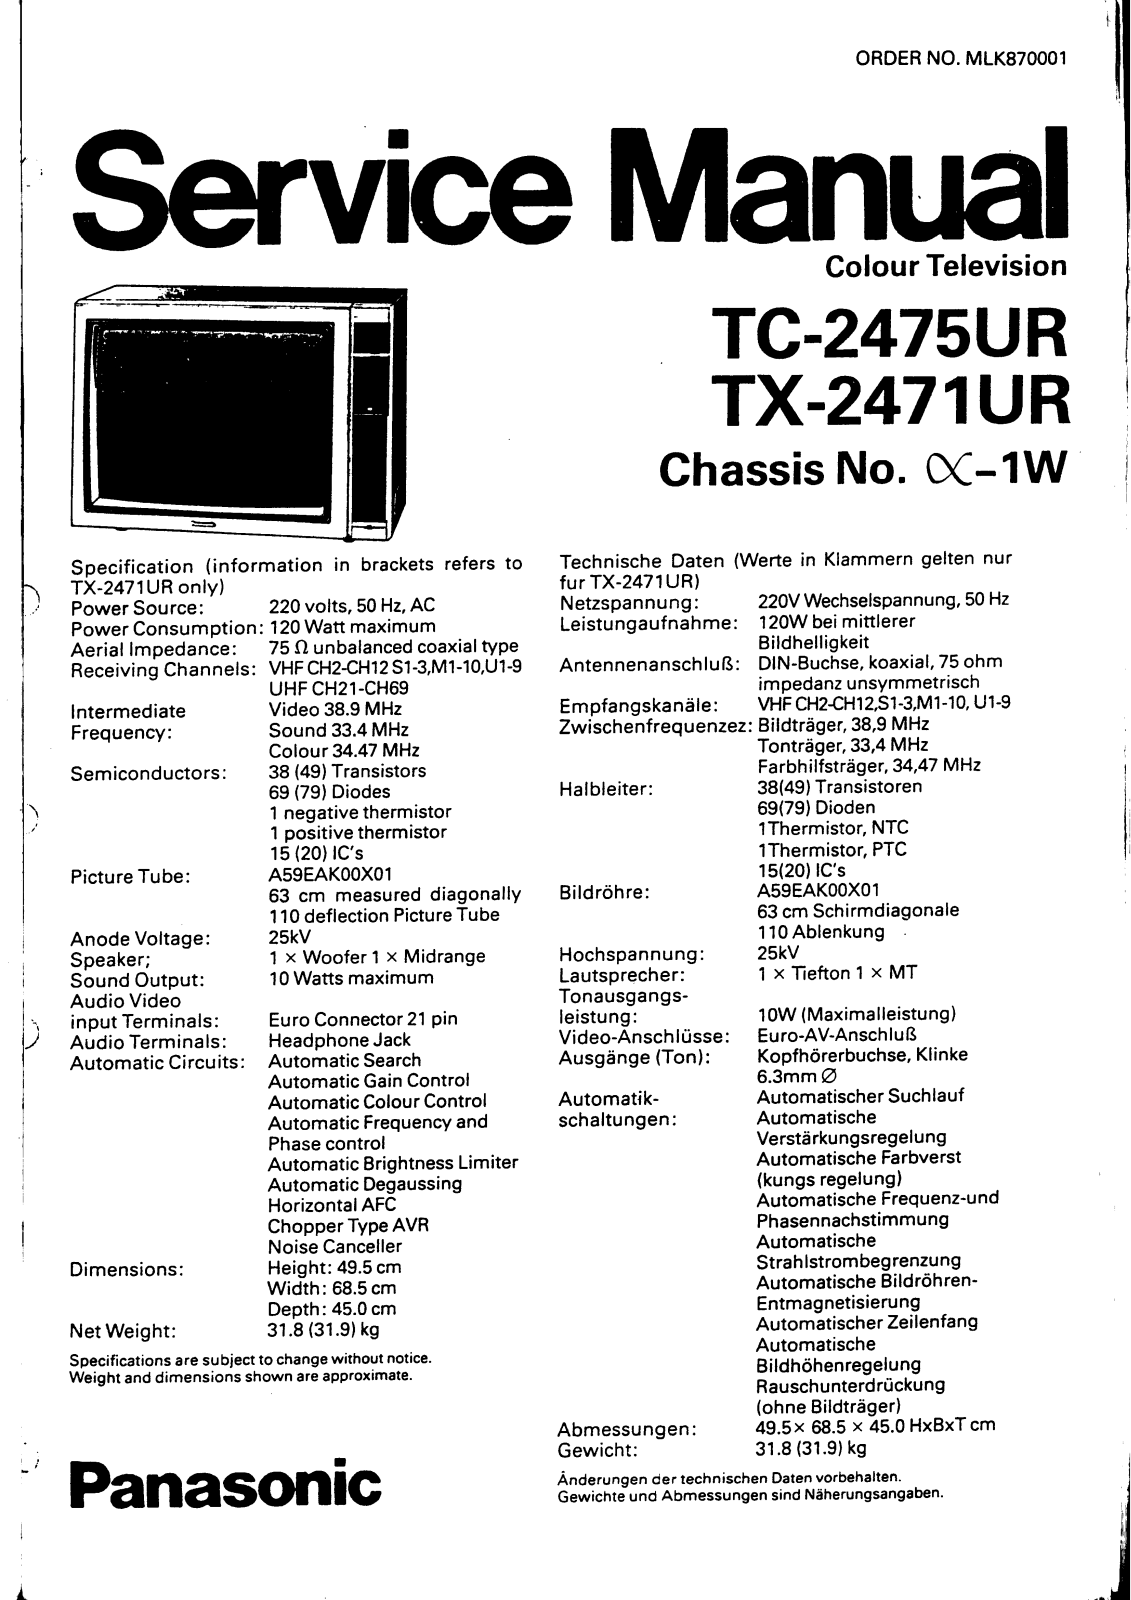 panasonic tc-2475ur, 2471ur Service Manual